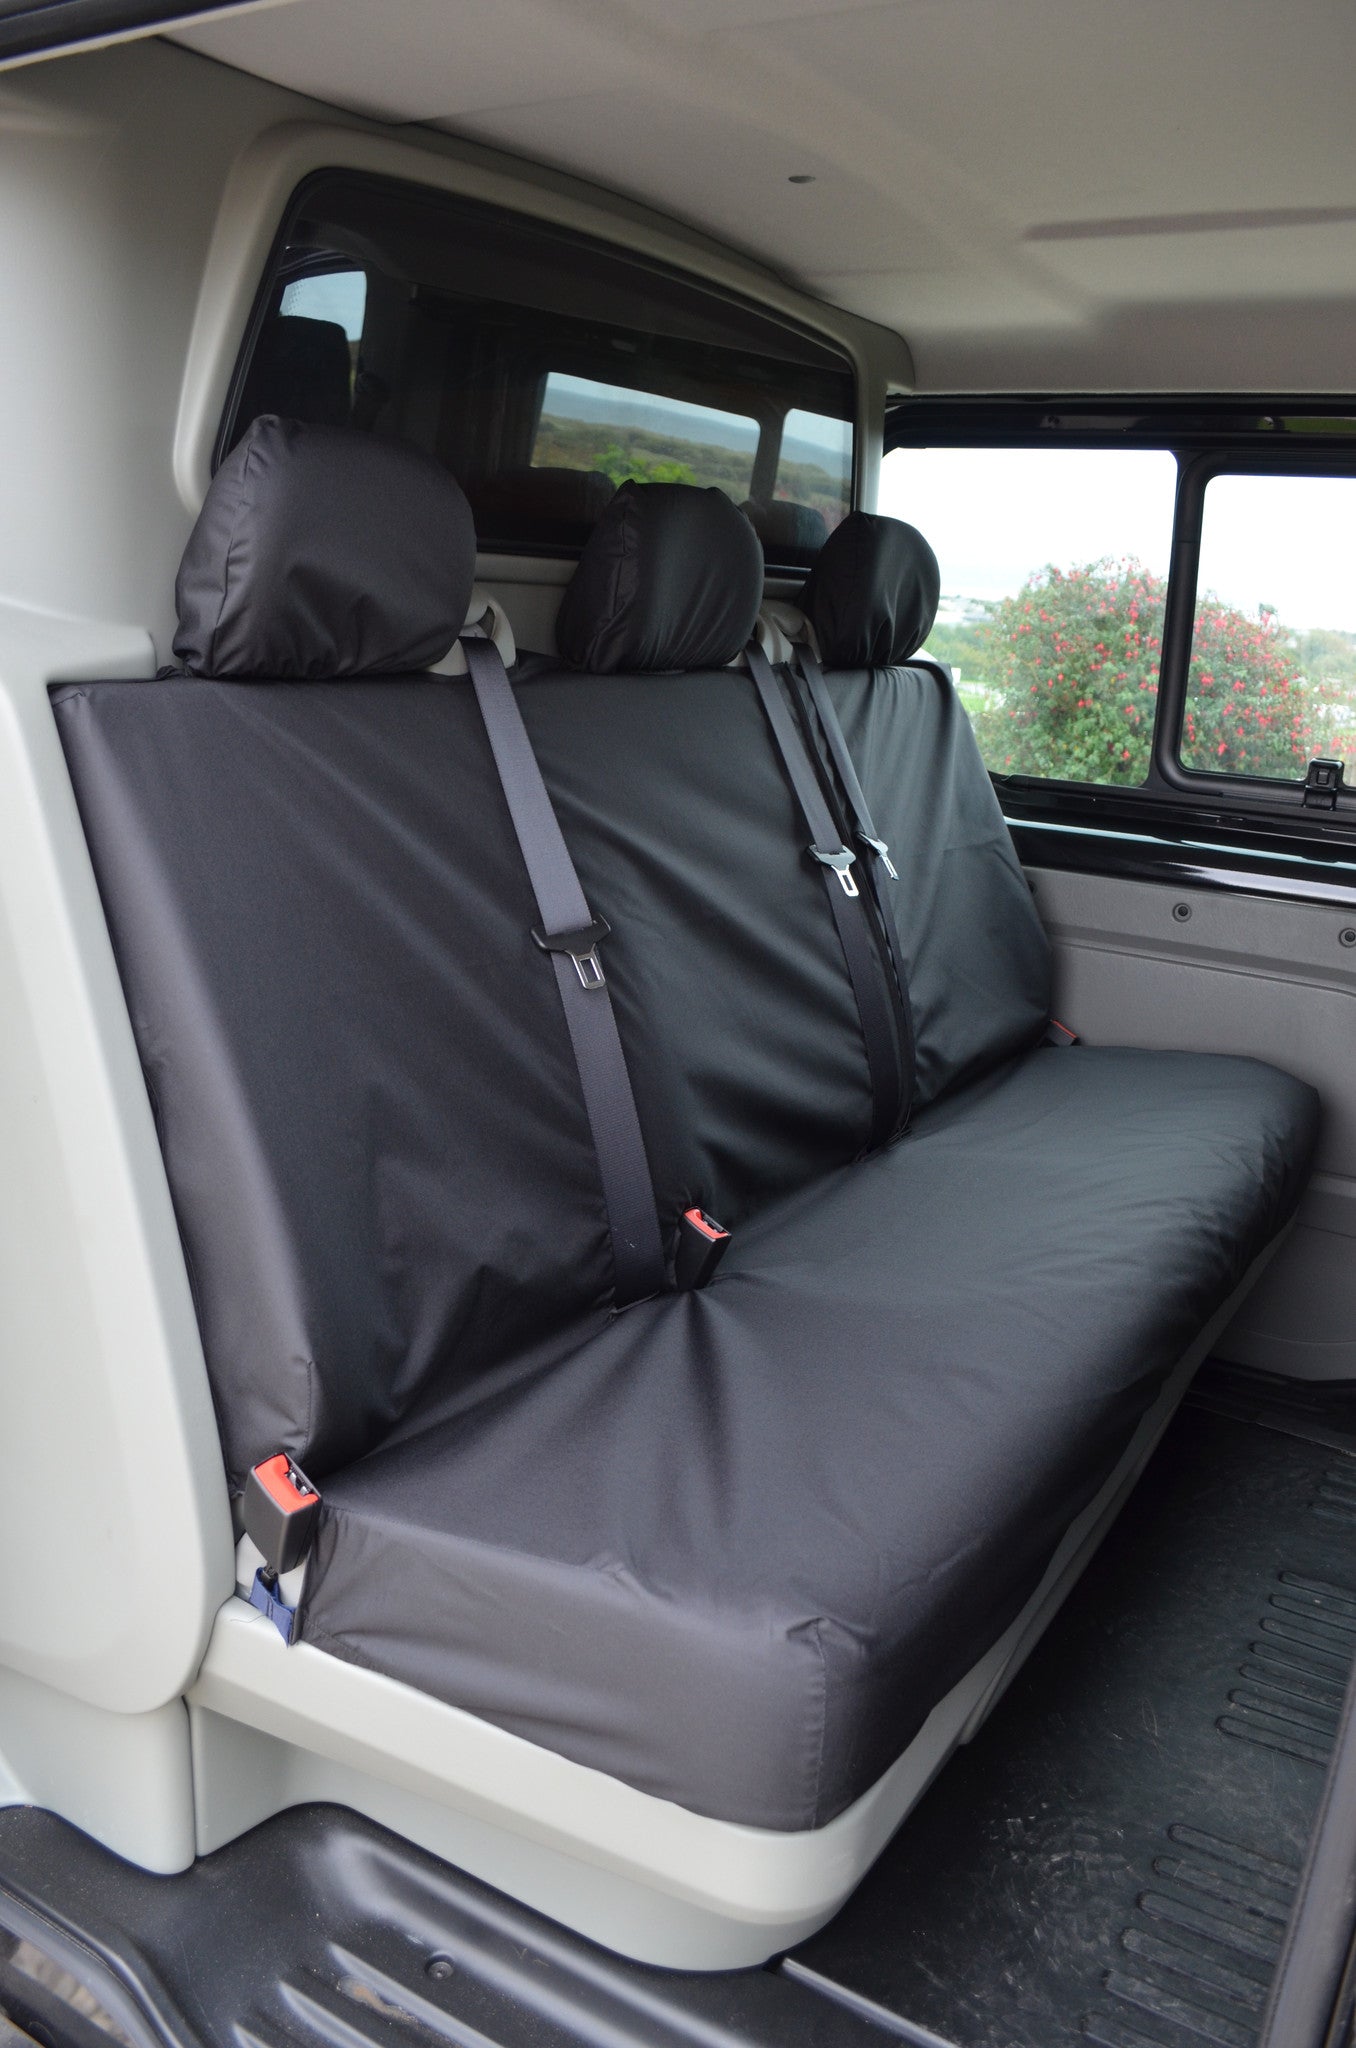 Nissan Primastar Crew Cab 2002 - 2006 Rear Seat Covers Black Turtle Covers Ltd